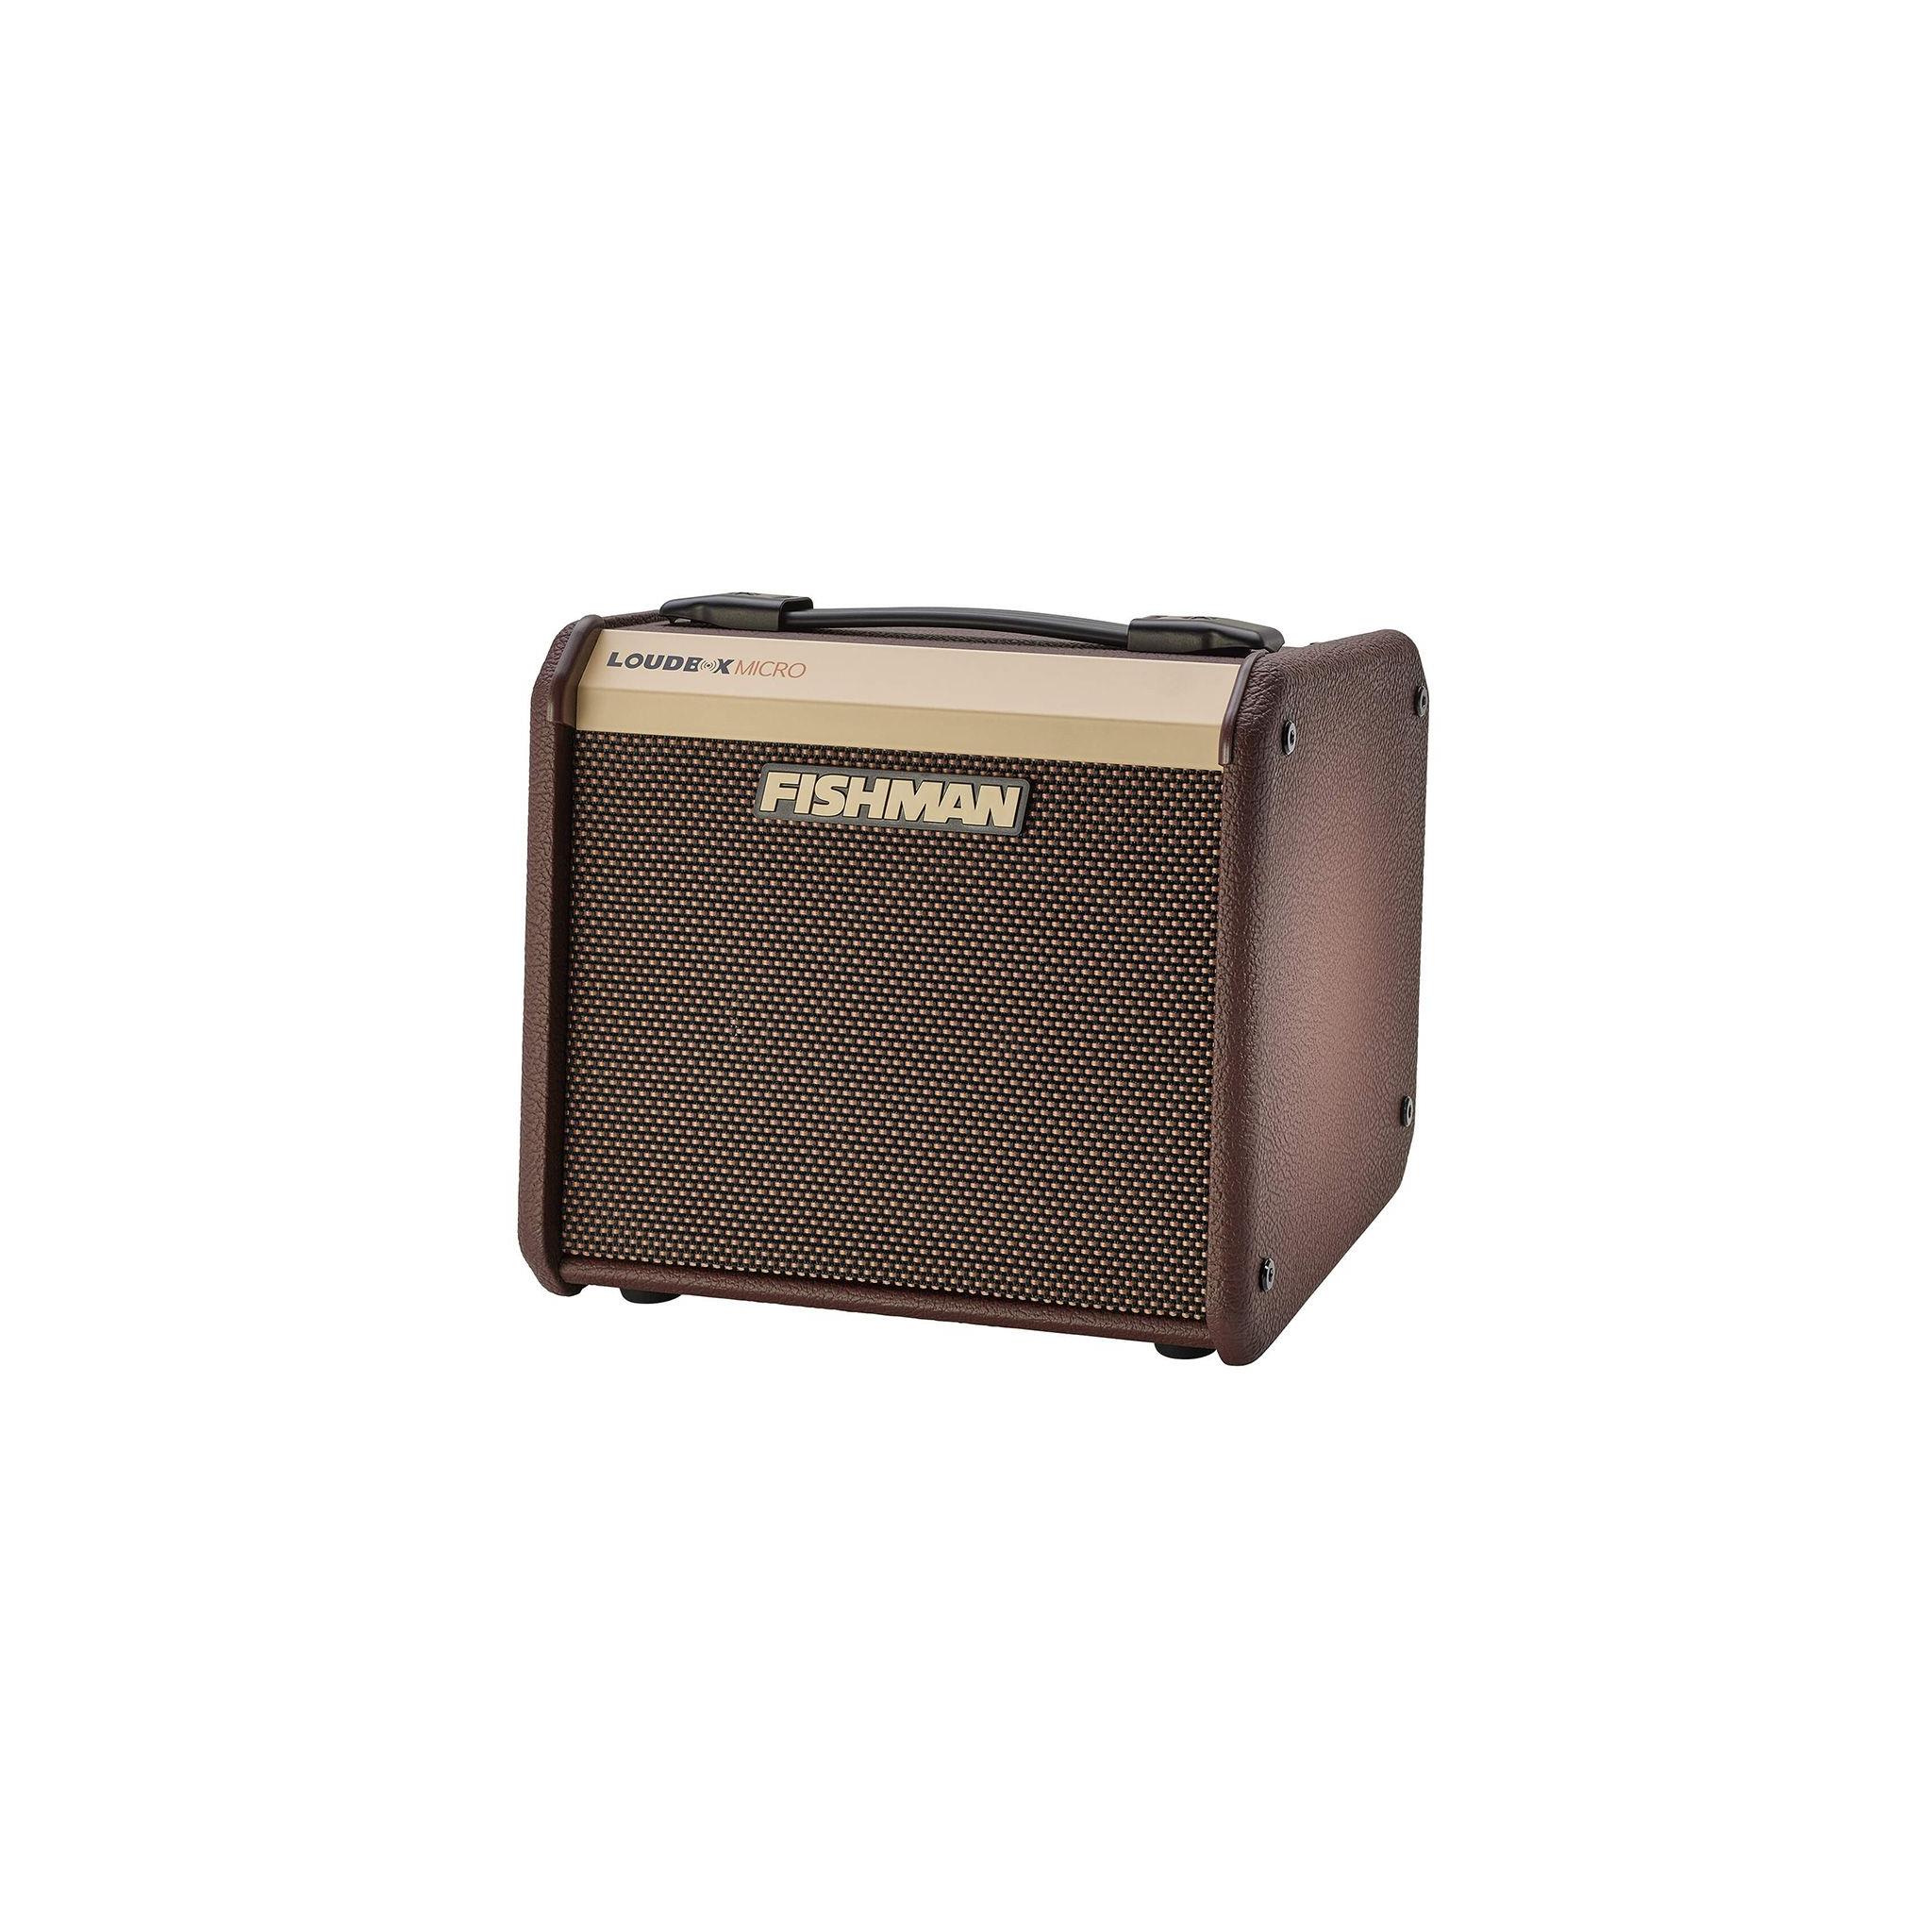 Fishman Loudbox Micro 40-watt 1 x 5.25-inch Acoustic Combo Amp